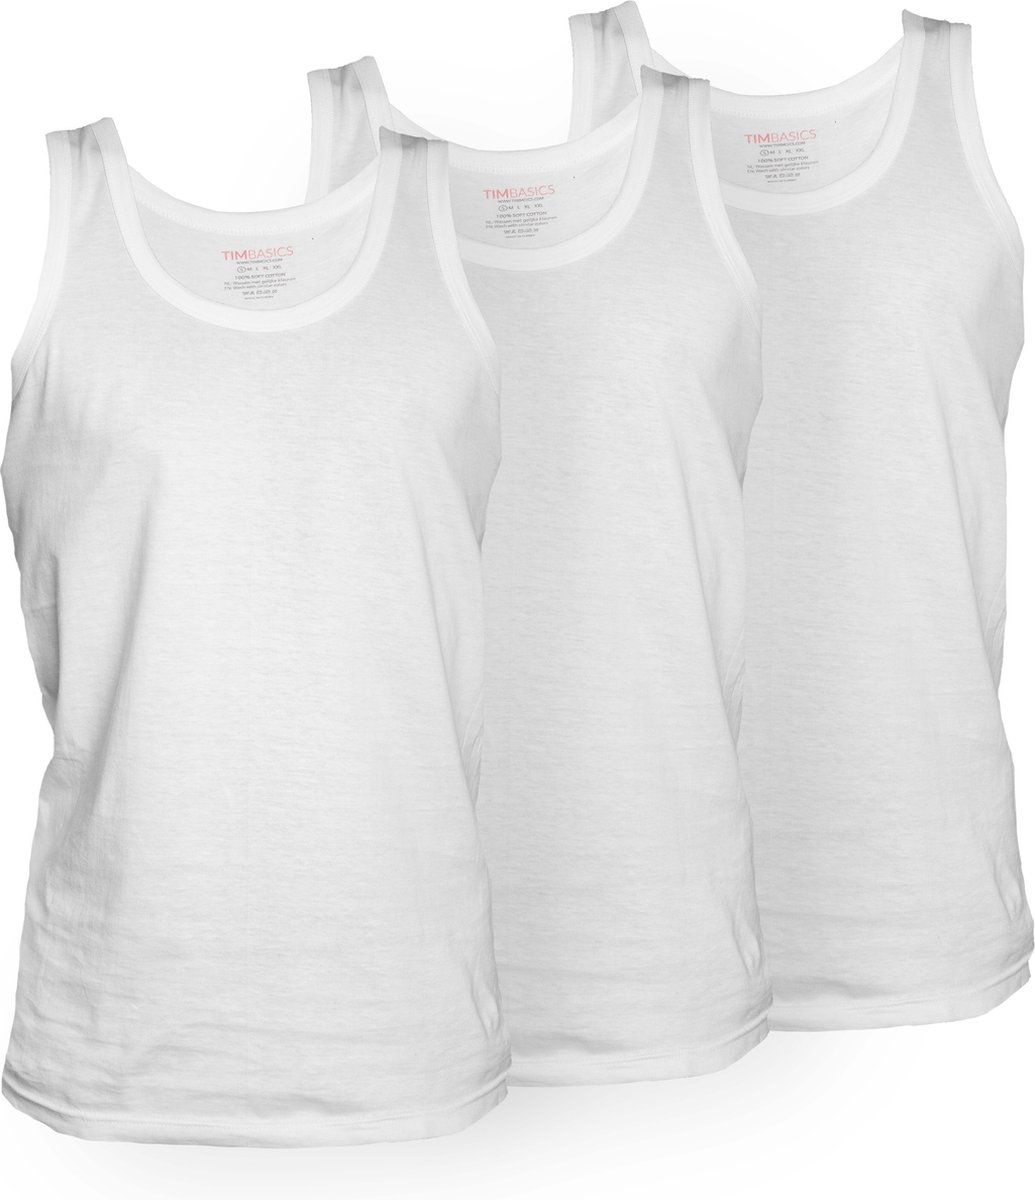 TimBasics - 100% Katoen - Heren Onderhemd - 3-Pack - Wit - M - Tanktop heren - Onderhemden heren